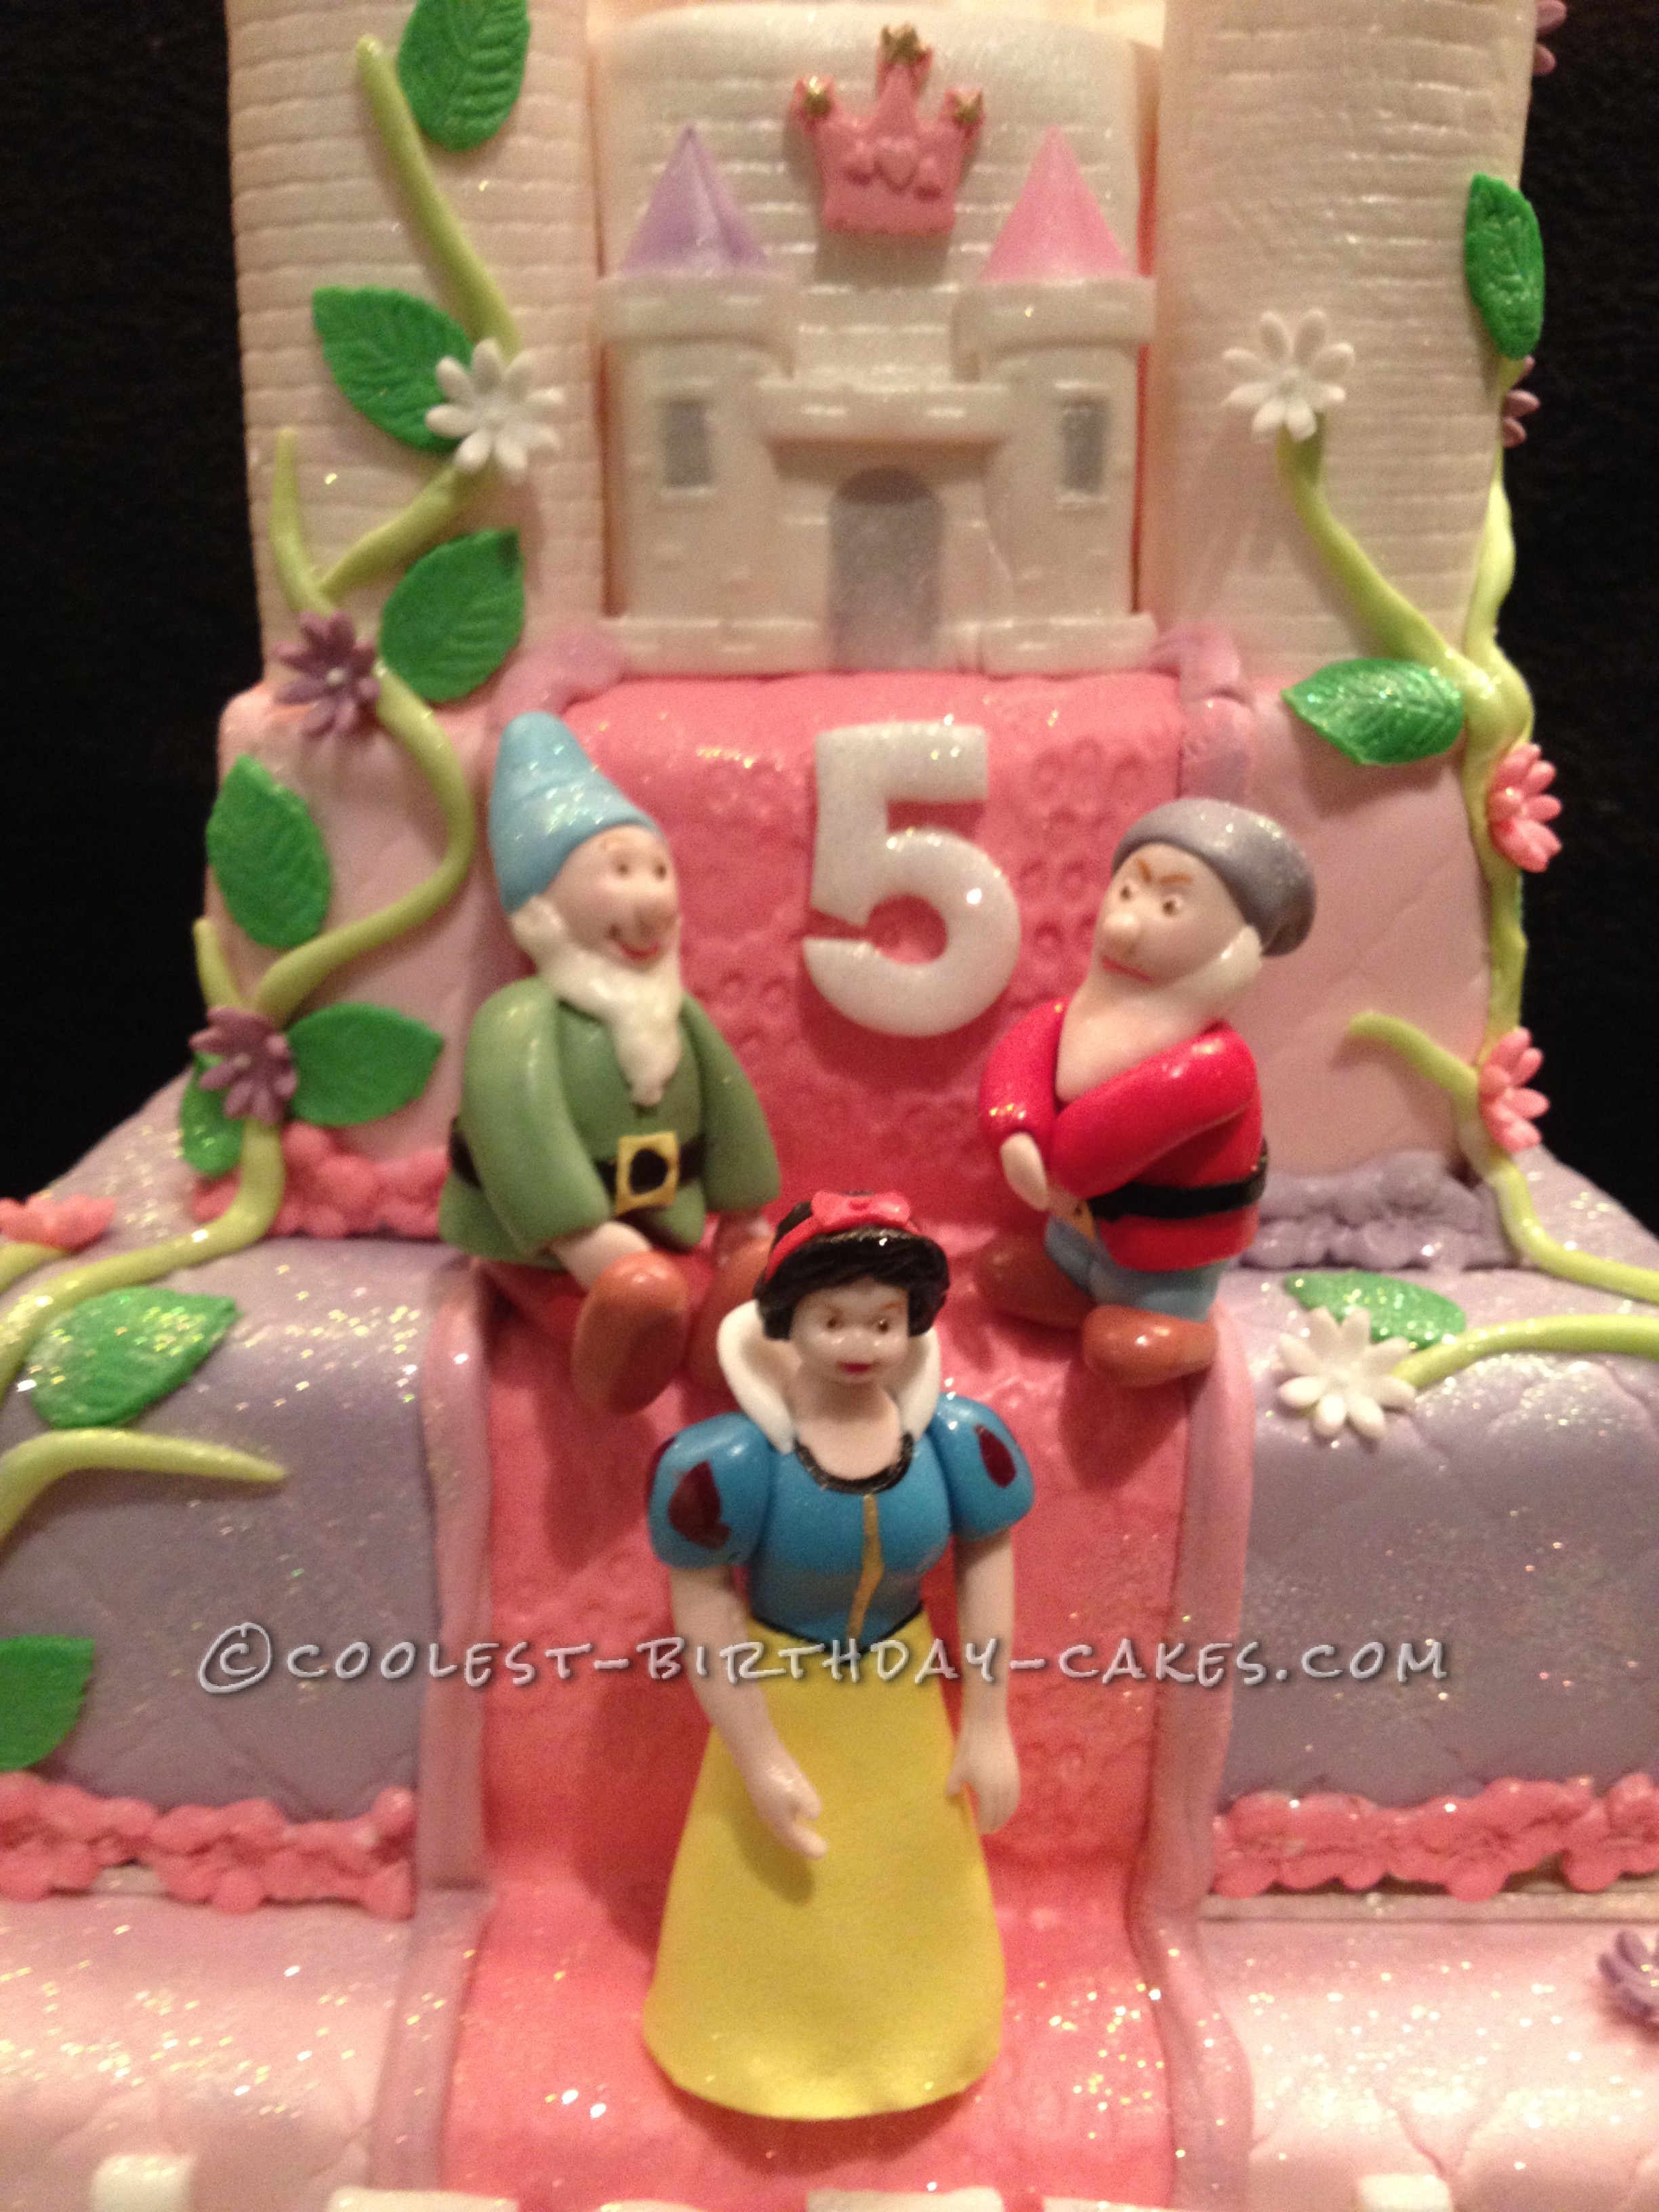 Coolest Snow White and the Seven Dwarfs Castle Cake